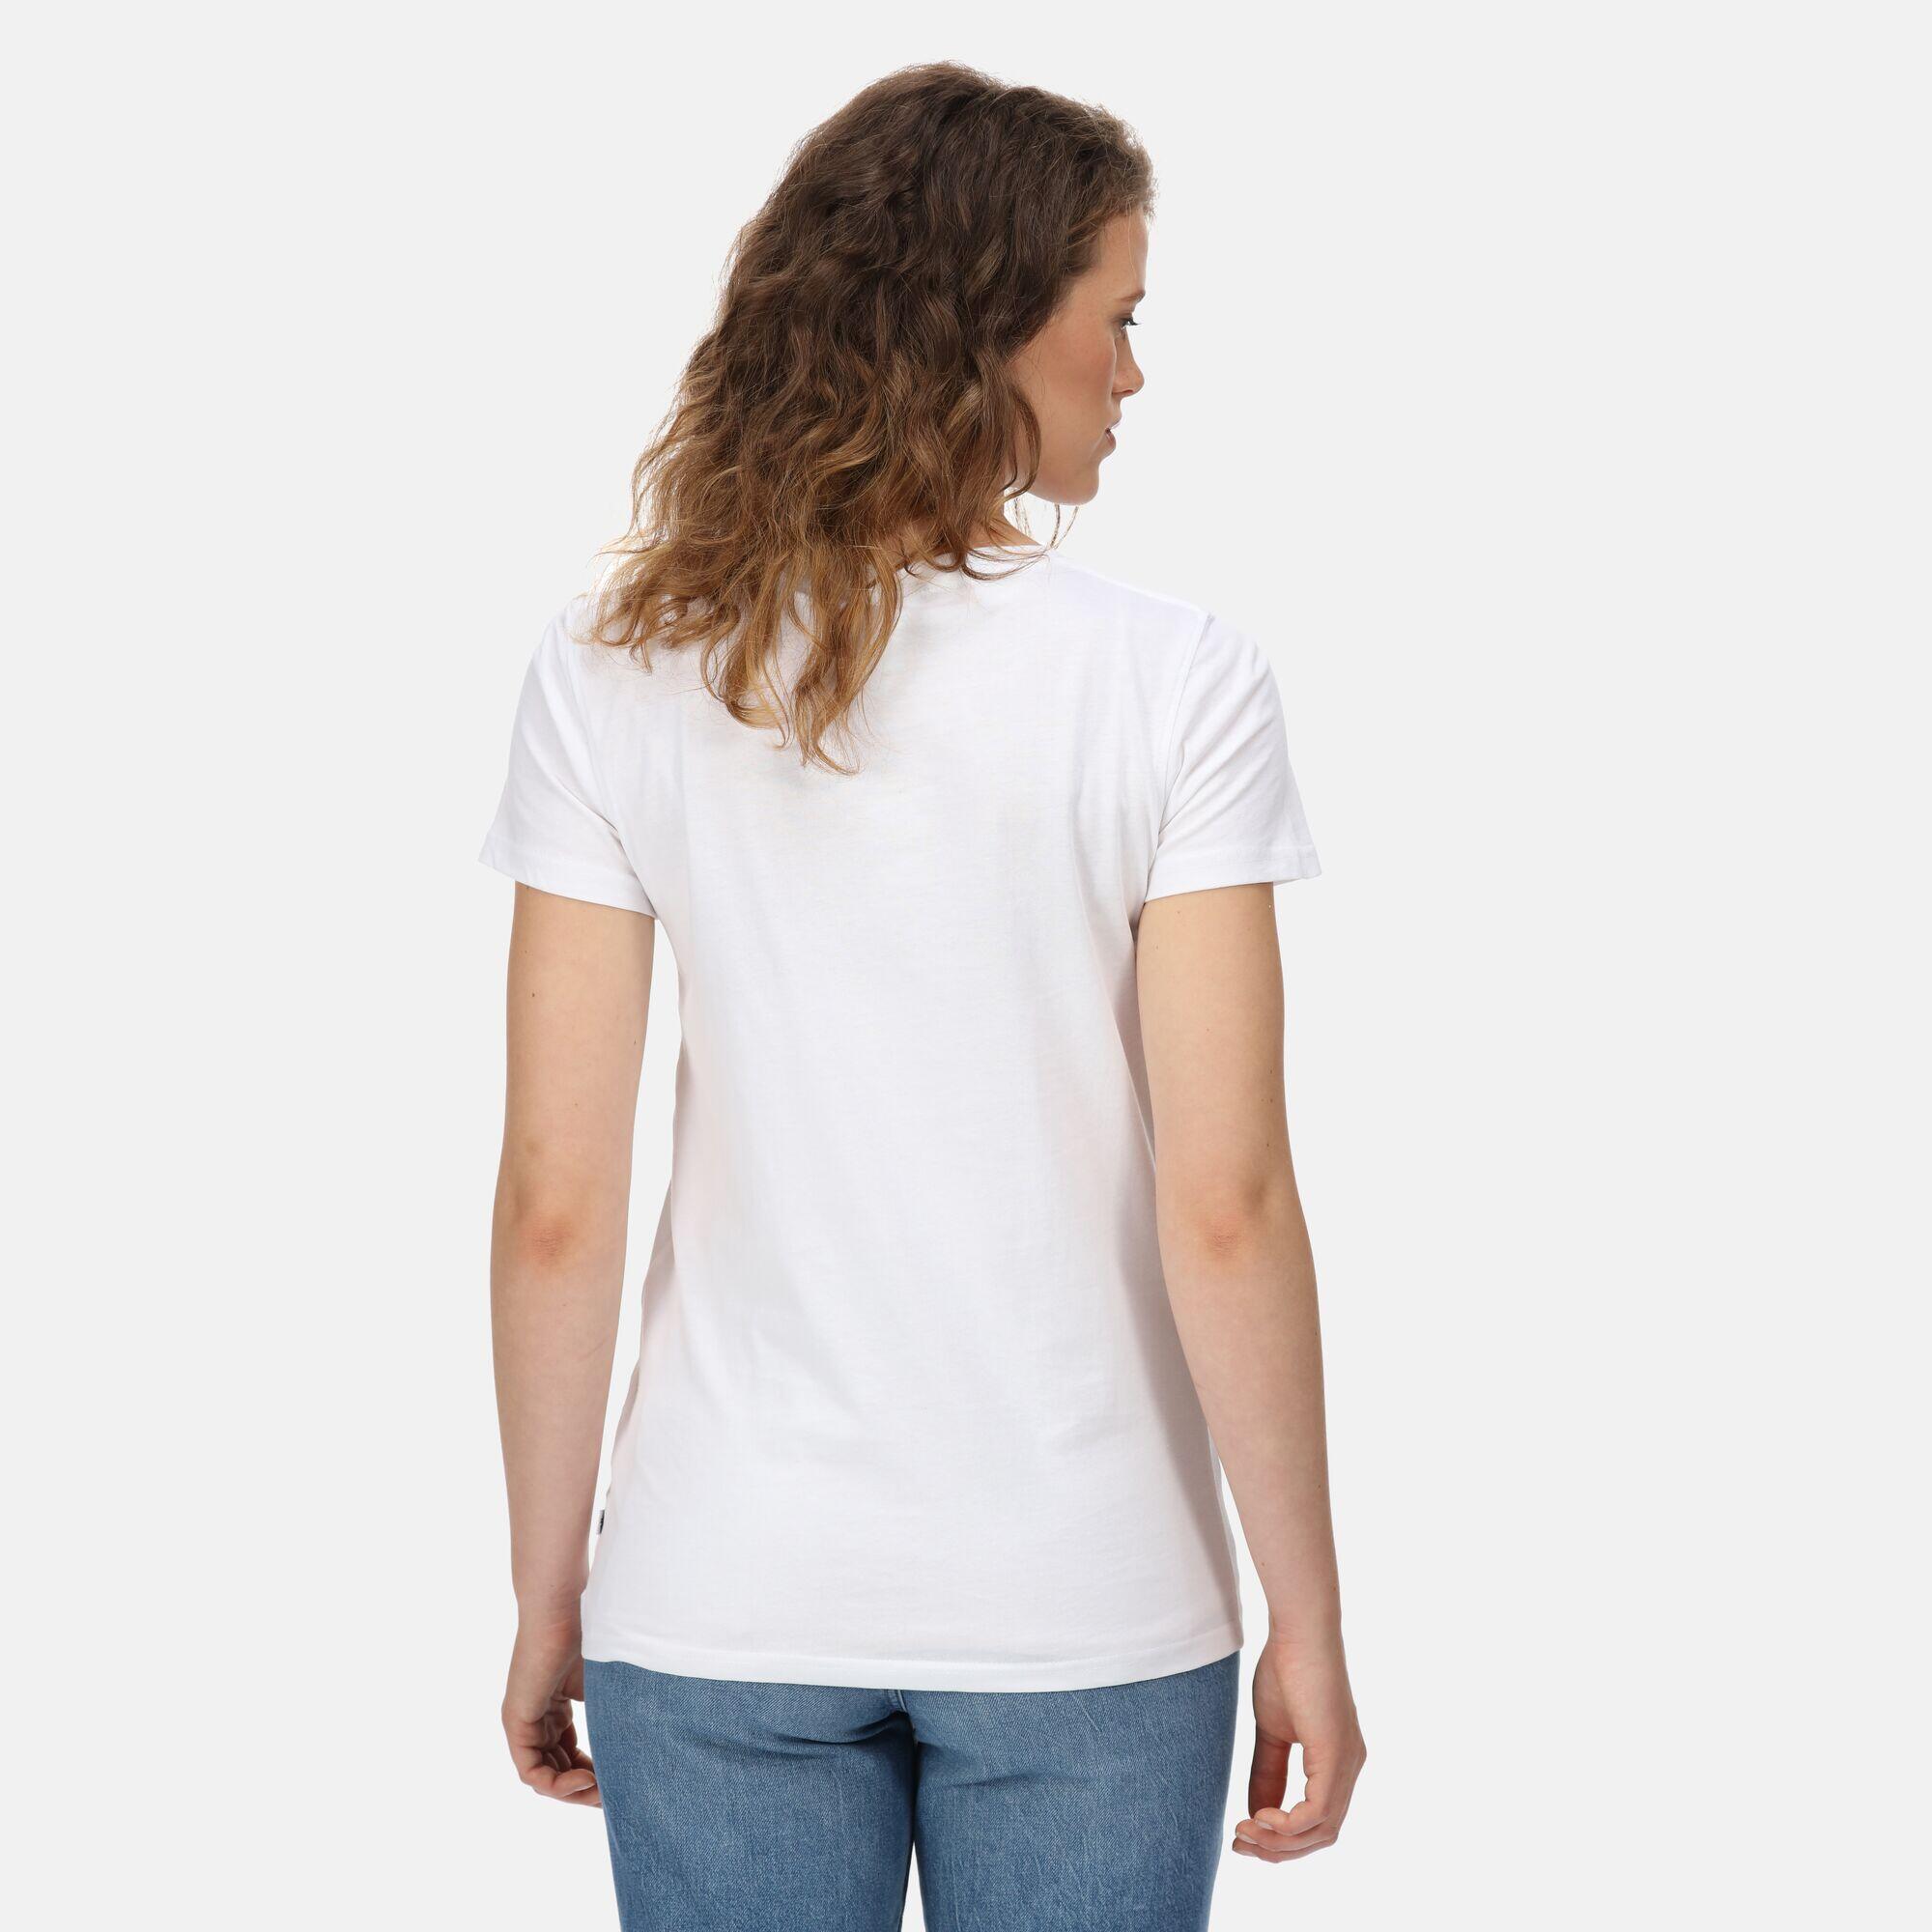 Filandra VI Women's Walking Short Sleeve T-Shirt - White 2/5